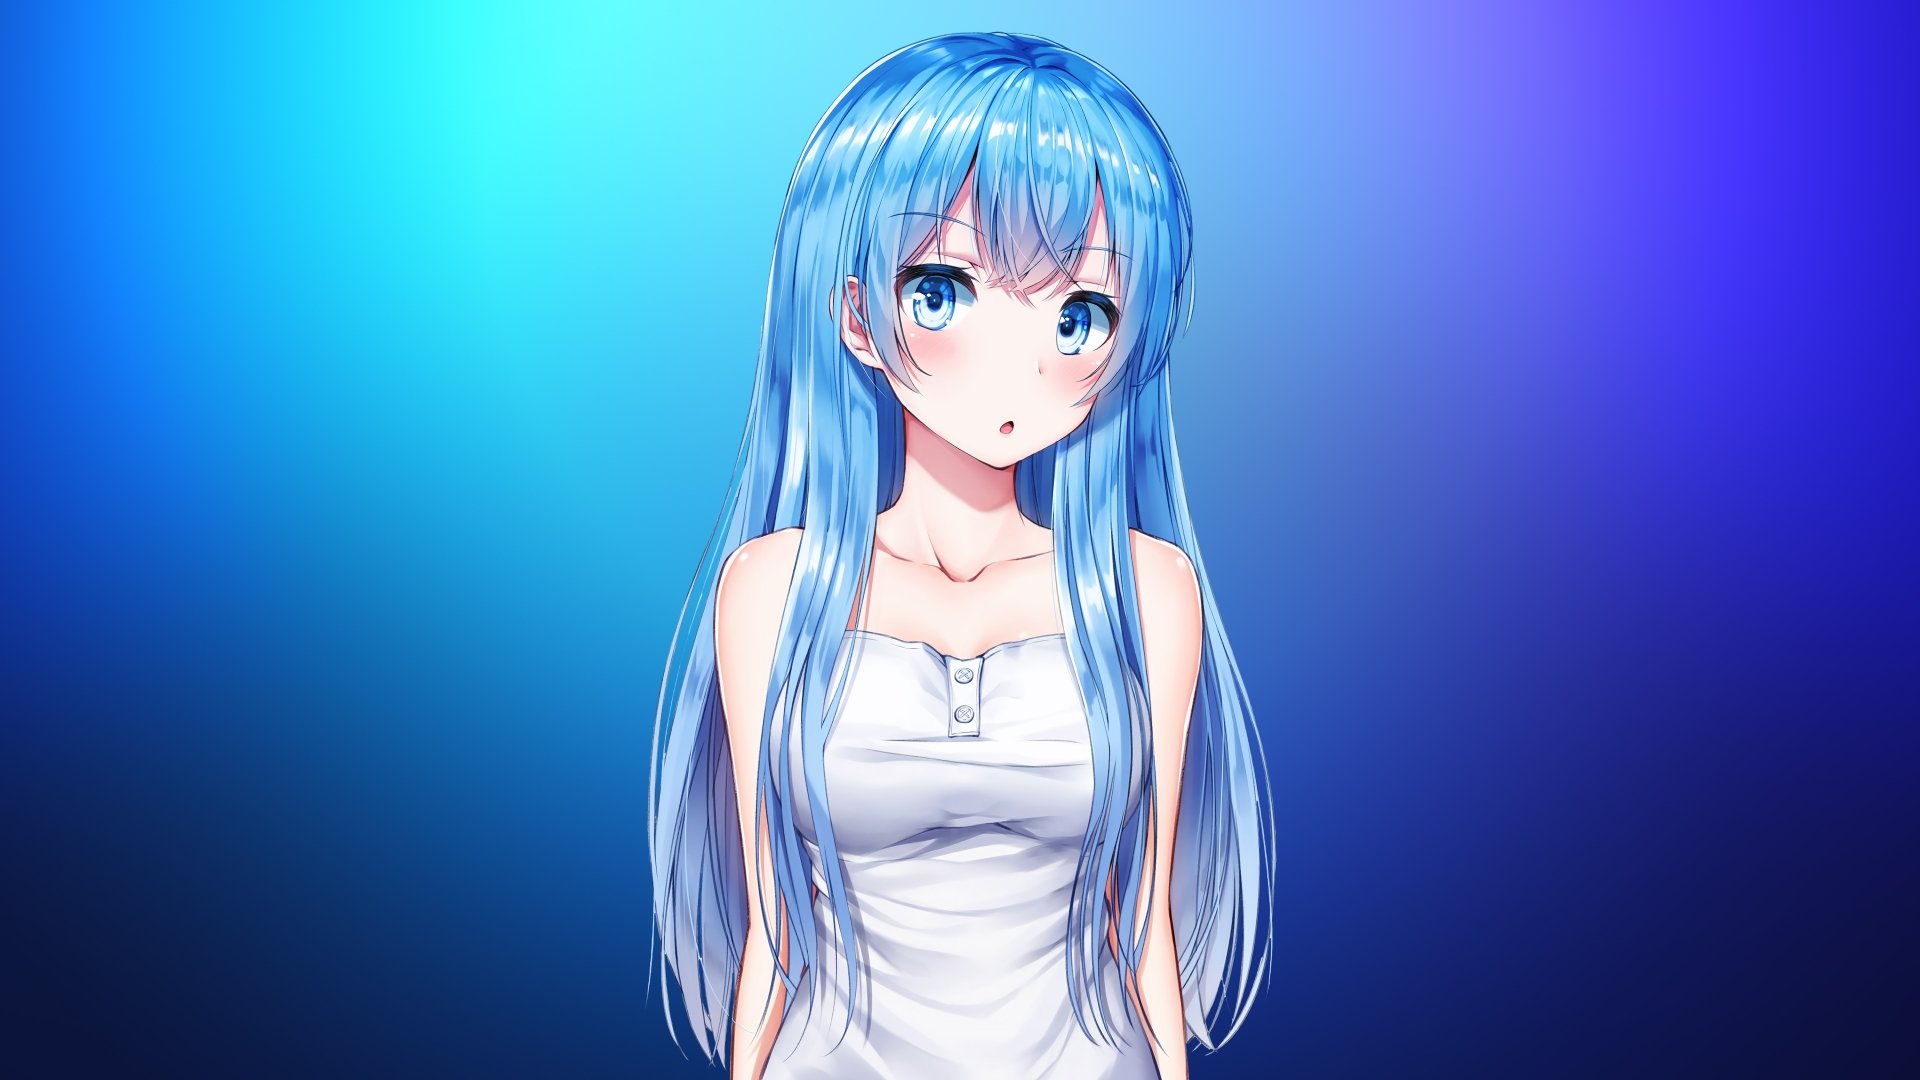 Chica Anime azul Fondo de pantalla 4k Ultra HD ID:4571